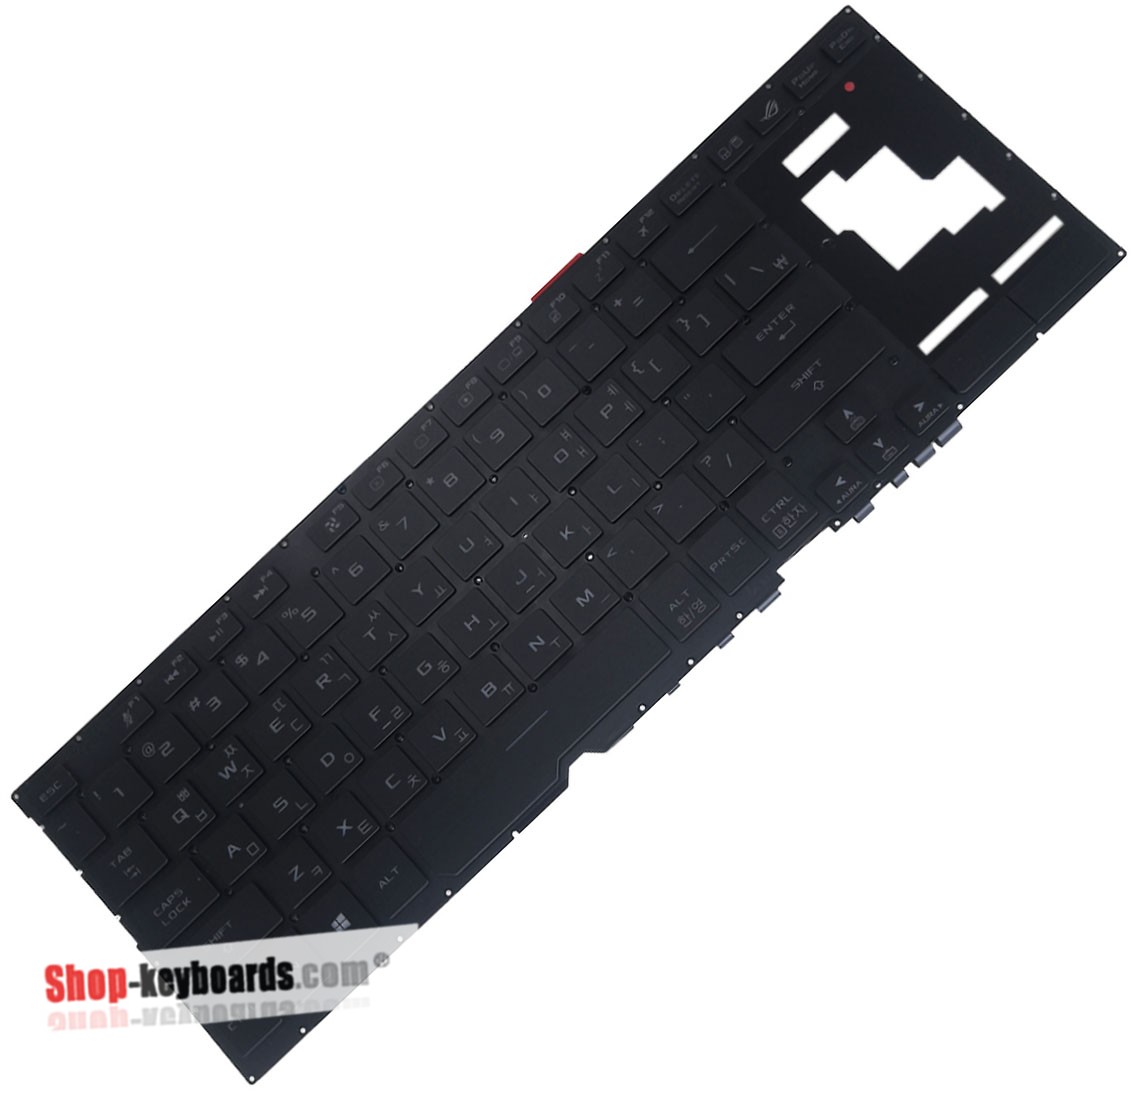 Asus V161126GK3  Keyboard replacement